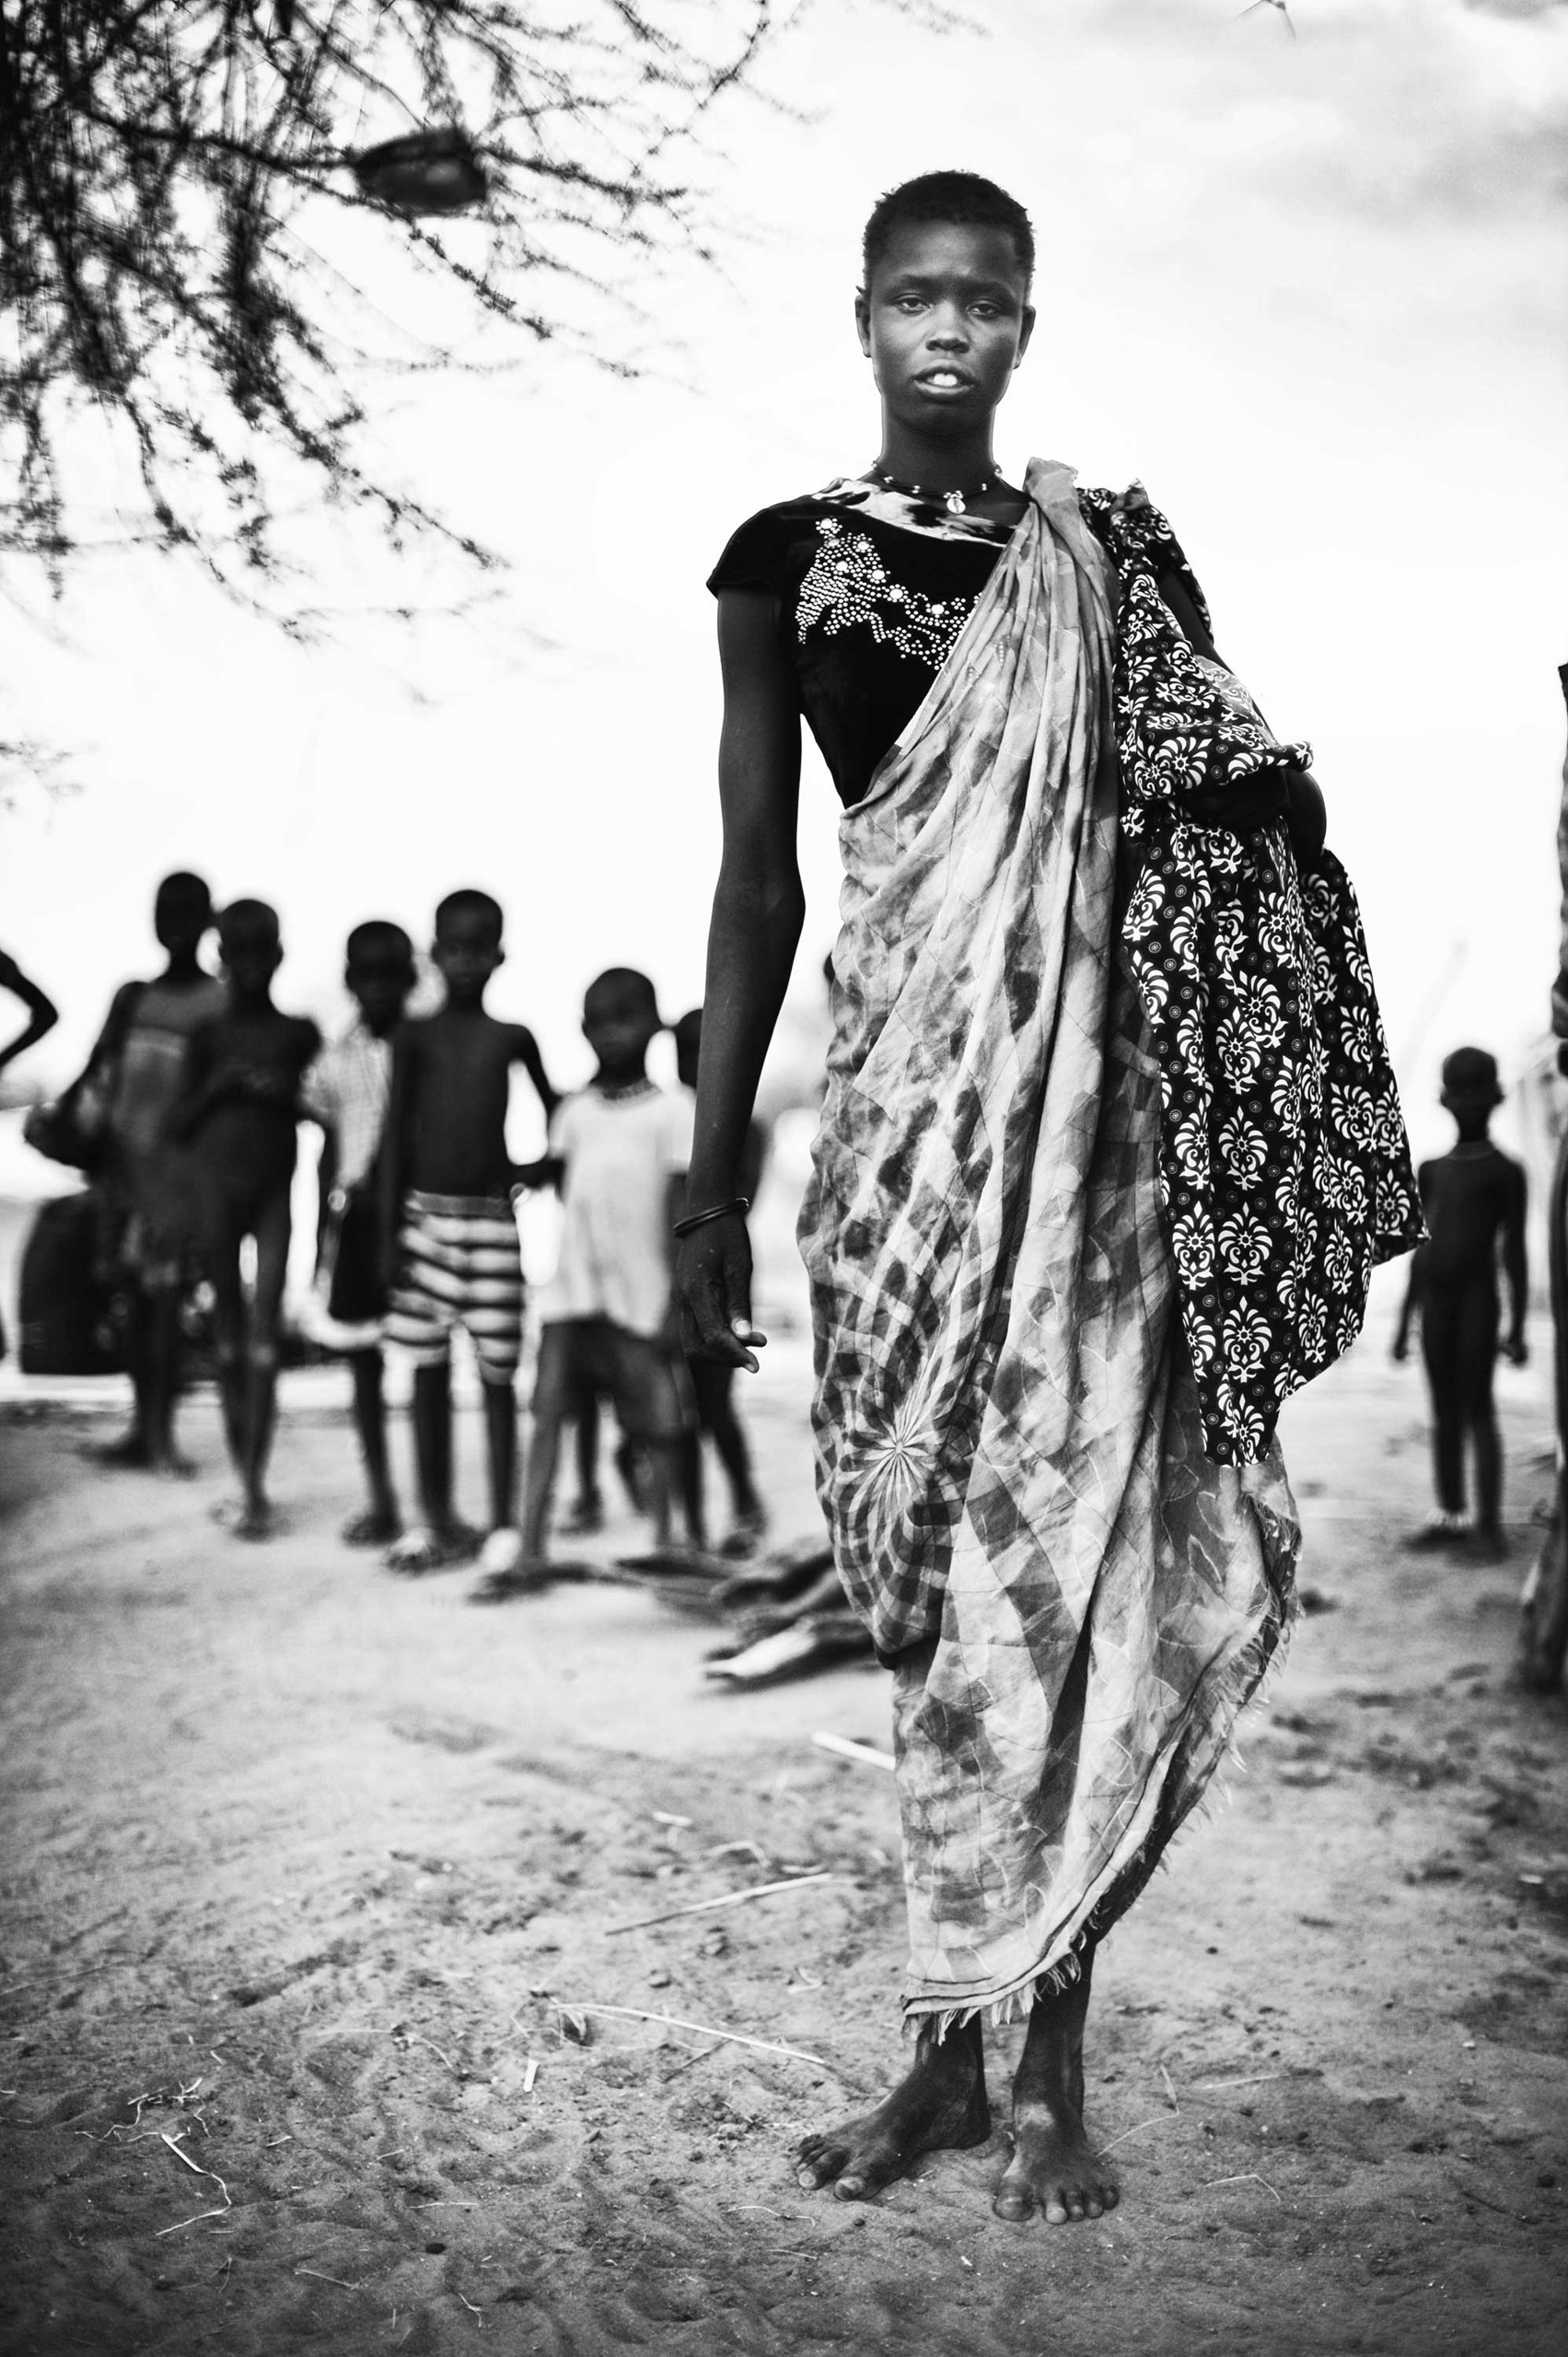 ugo-borga-south-soudan-portraits-2016-black-and-white-08